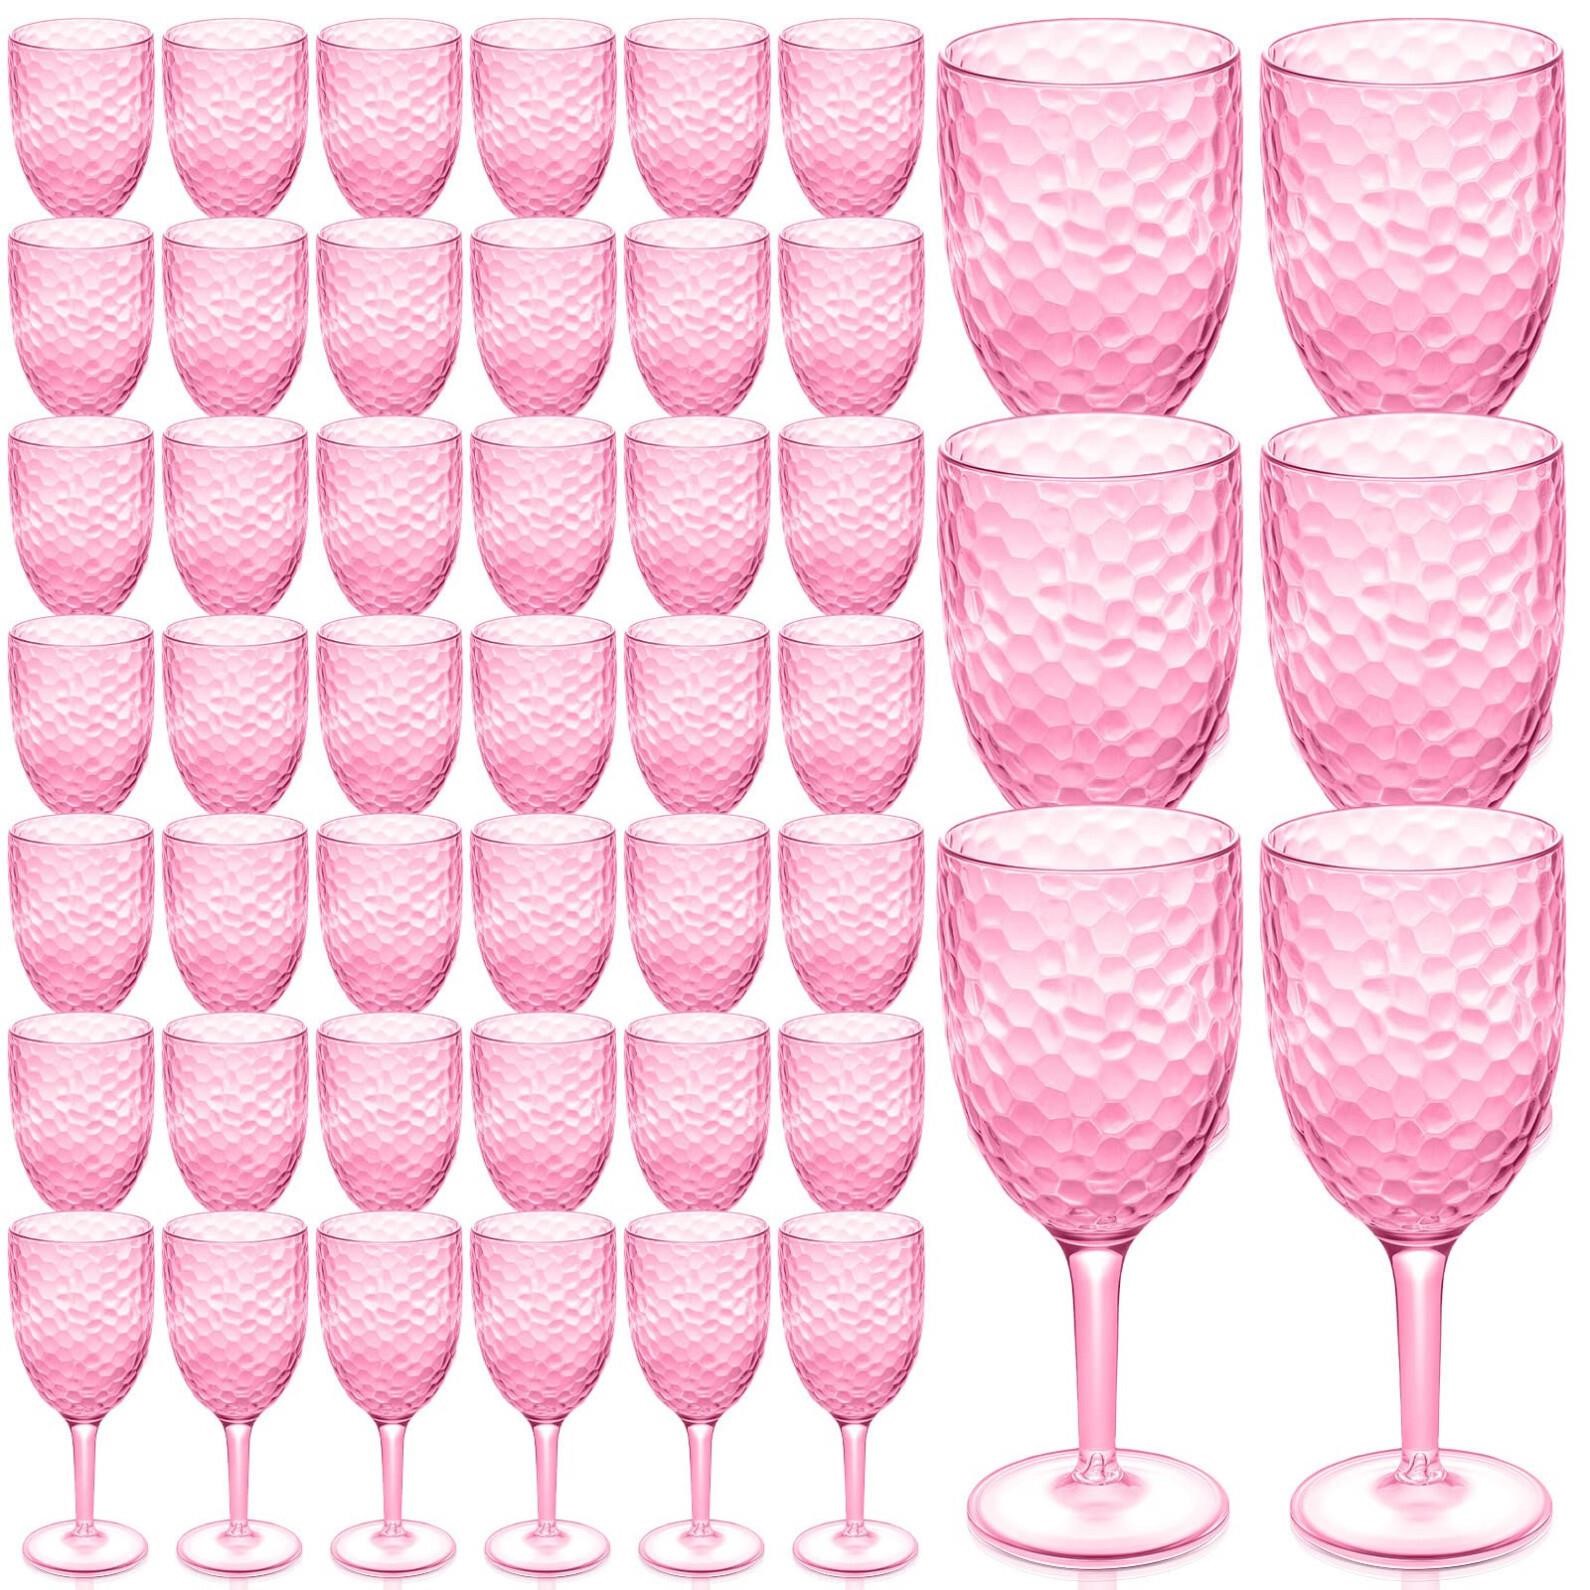 48 Pcs Pink Wine Glasses 8 oz Plastic Goblets Patt